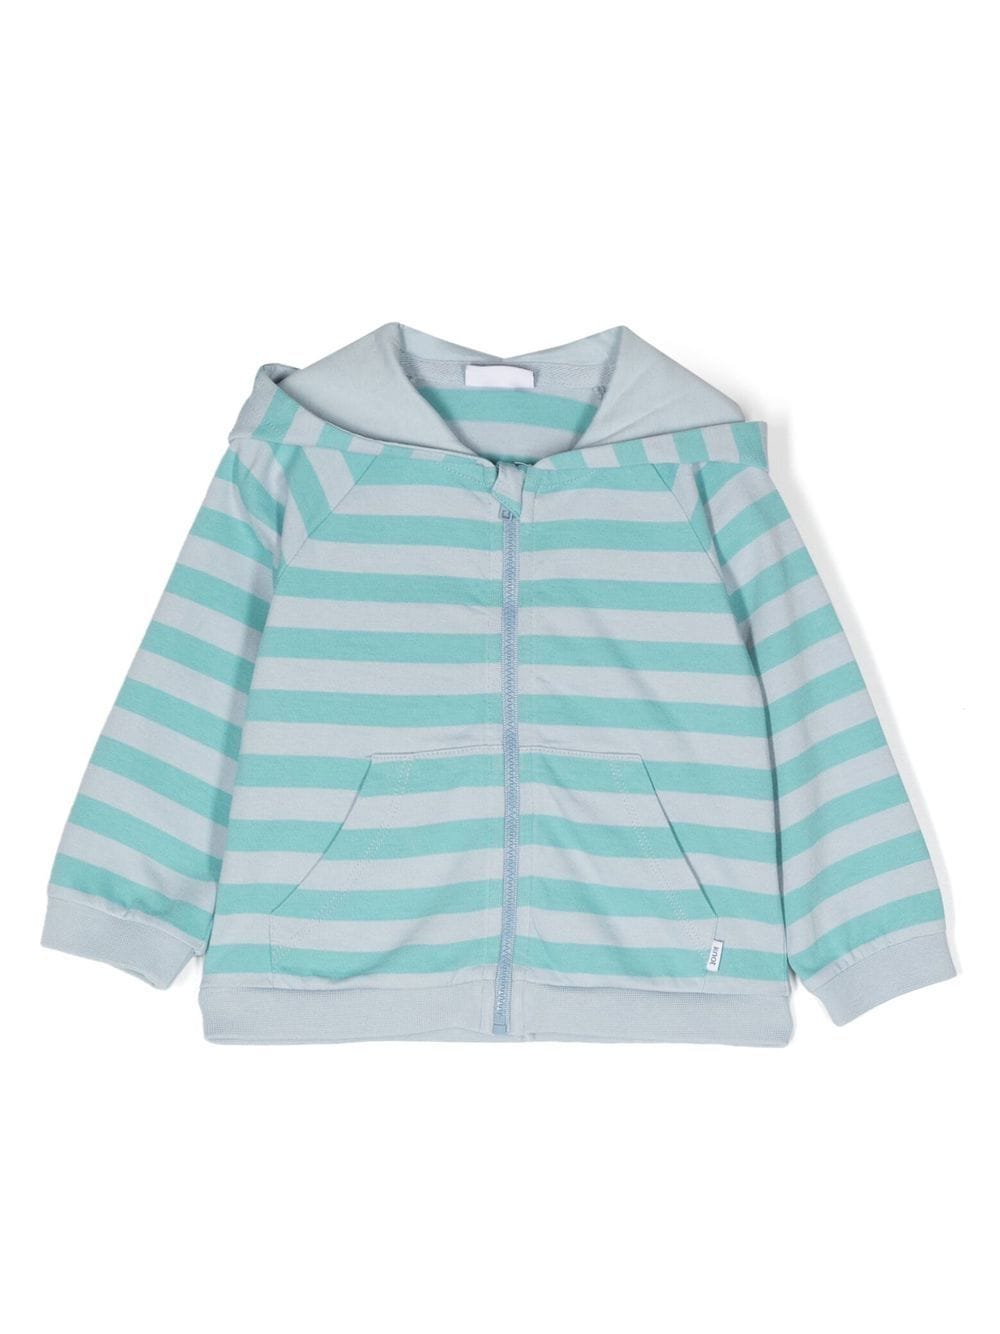 Knot Babies' Cotton Horizonatl Stripe Jacket In Blue